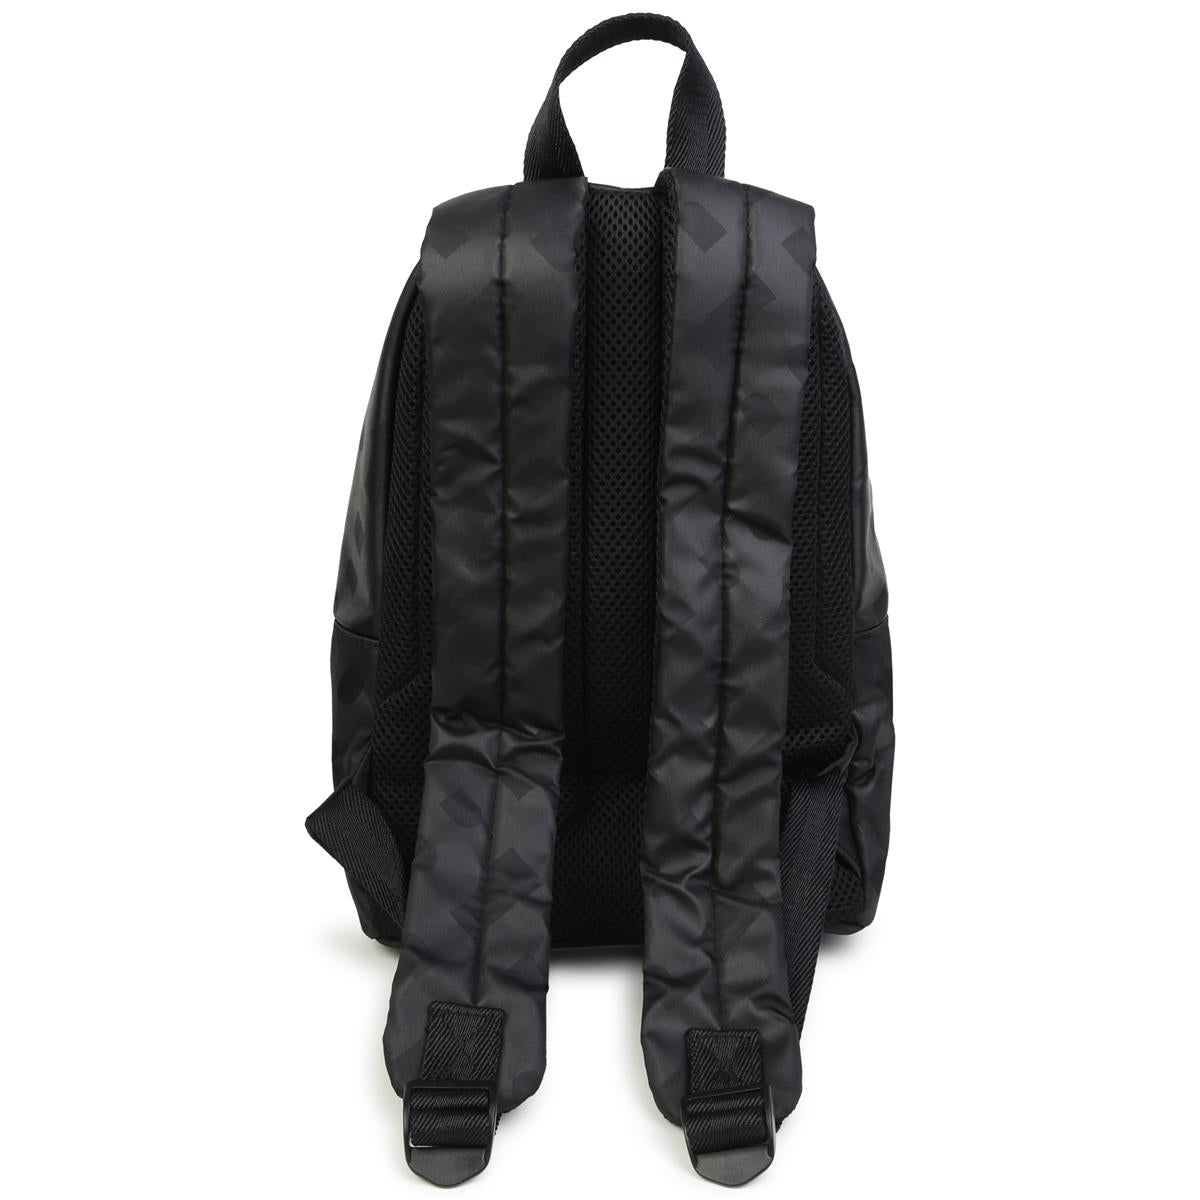 Boys Black Backpack(32x24x13.5cm)